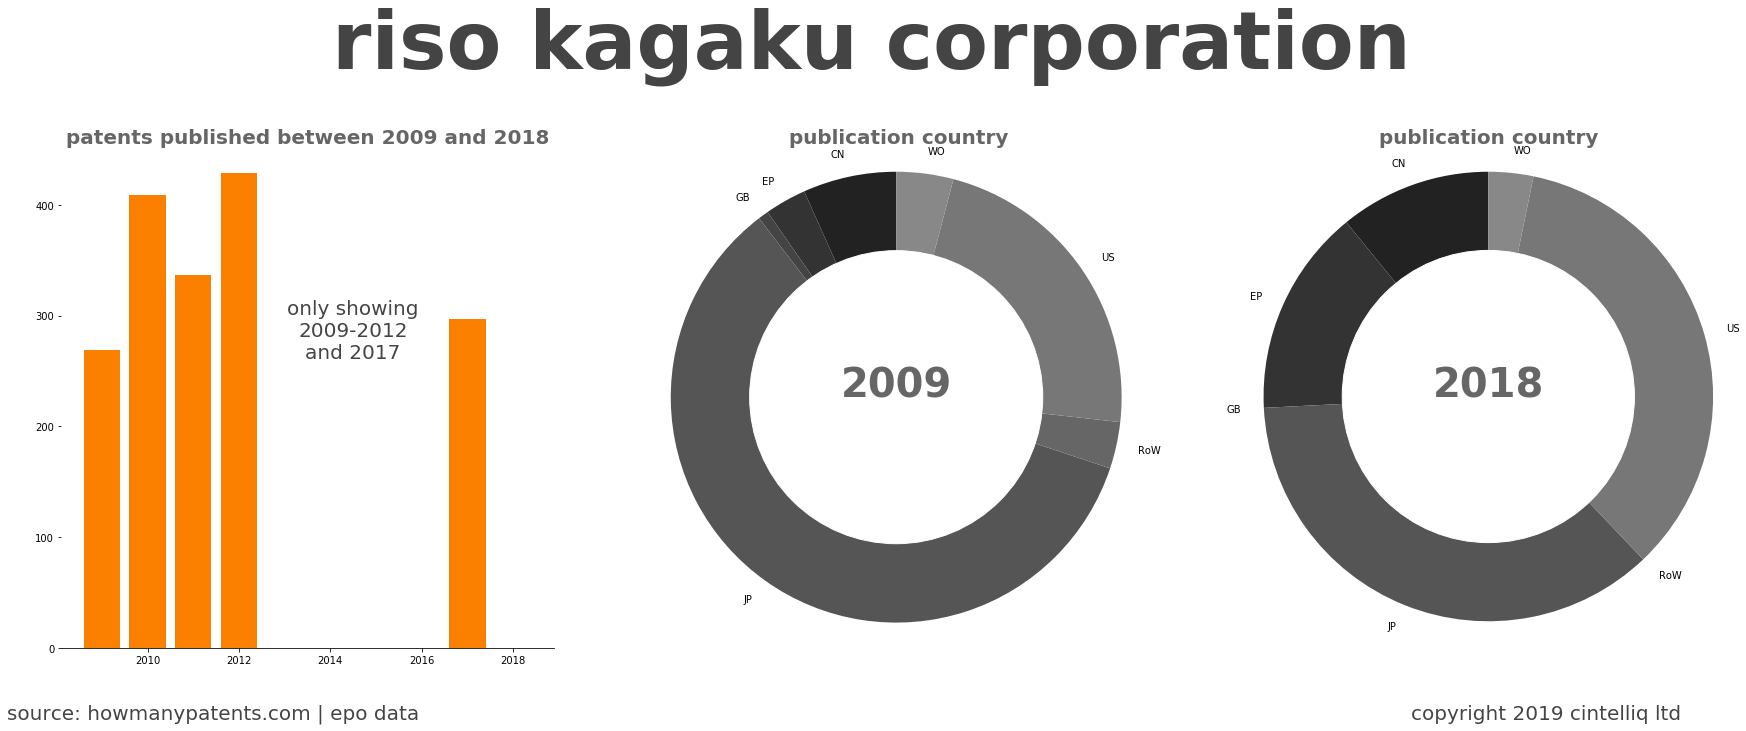 summary of patents for Riso Kagaku Corporation